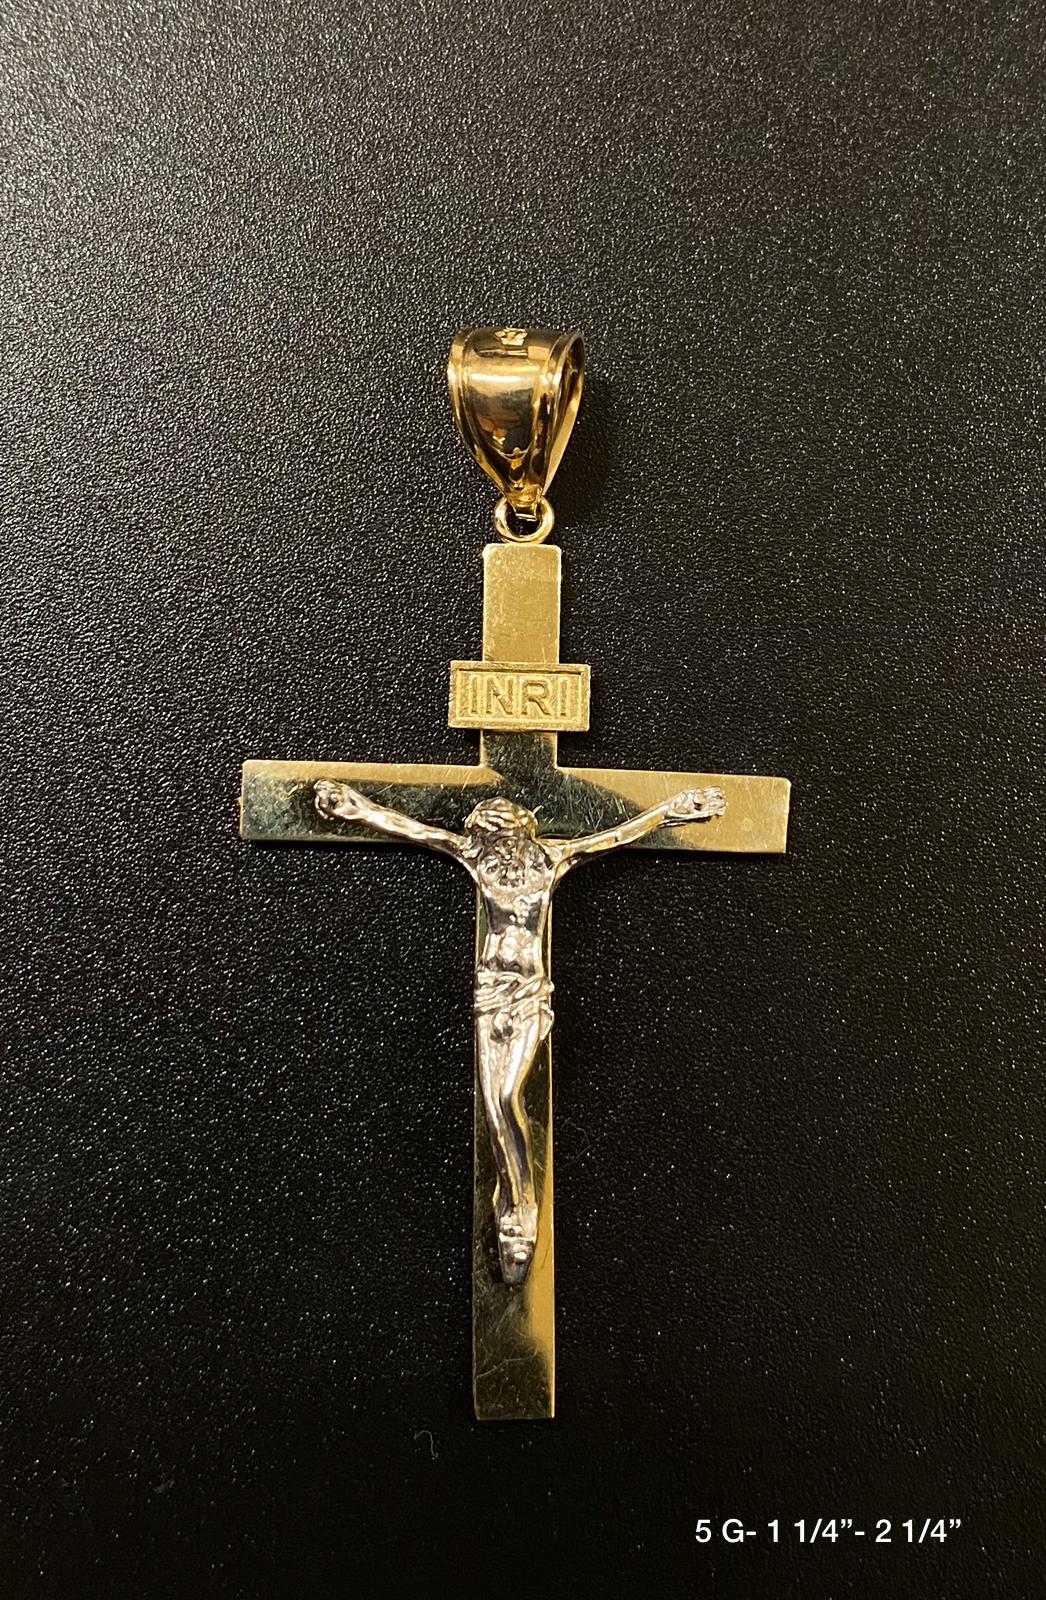 Crucifix pendant 10K solid gold